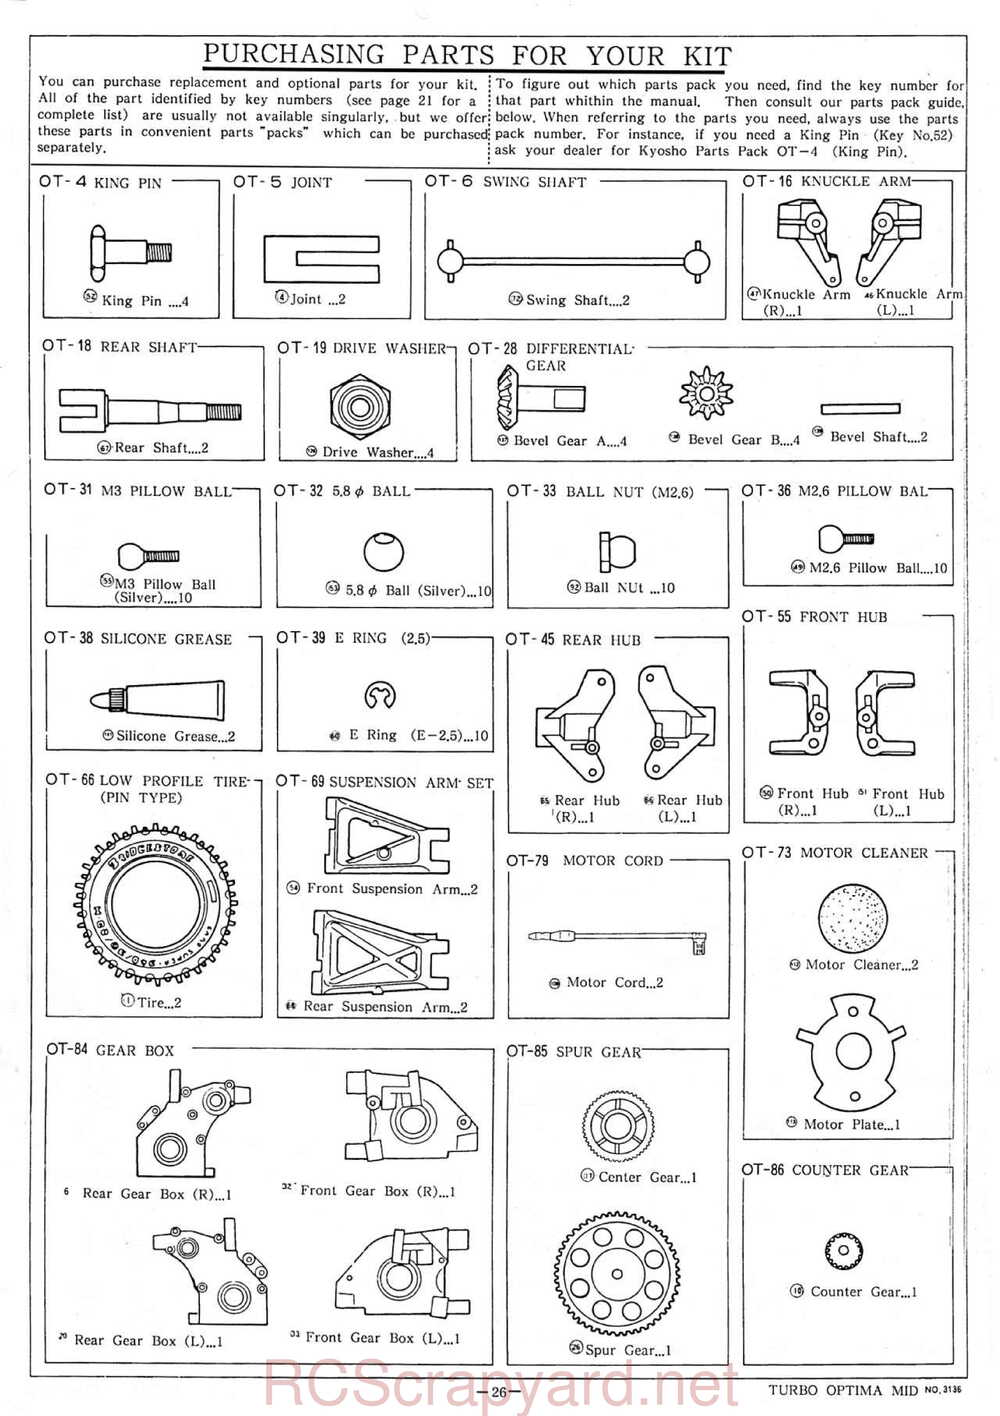 Kyosho - 3136 - Turbo-Optima-Mid - Manual - Page 26